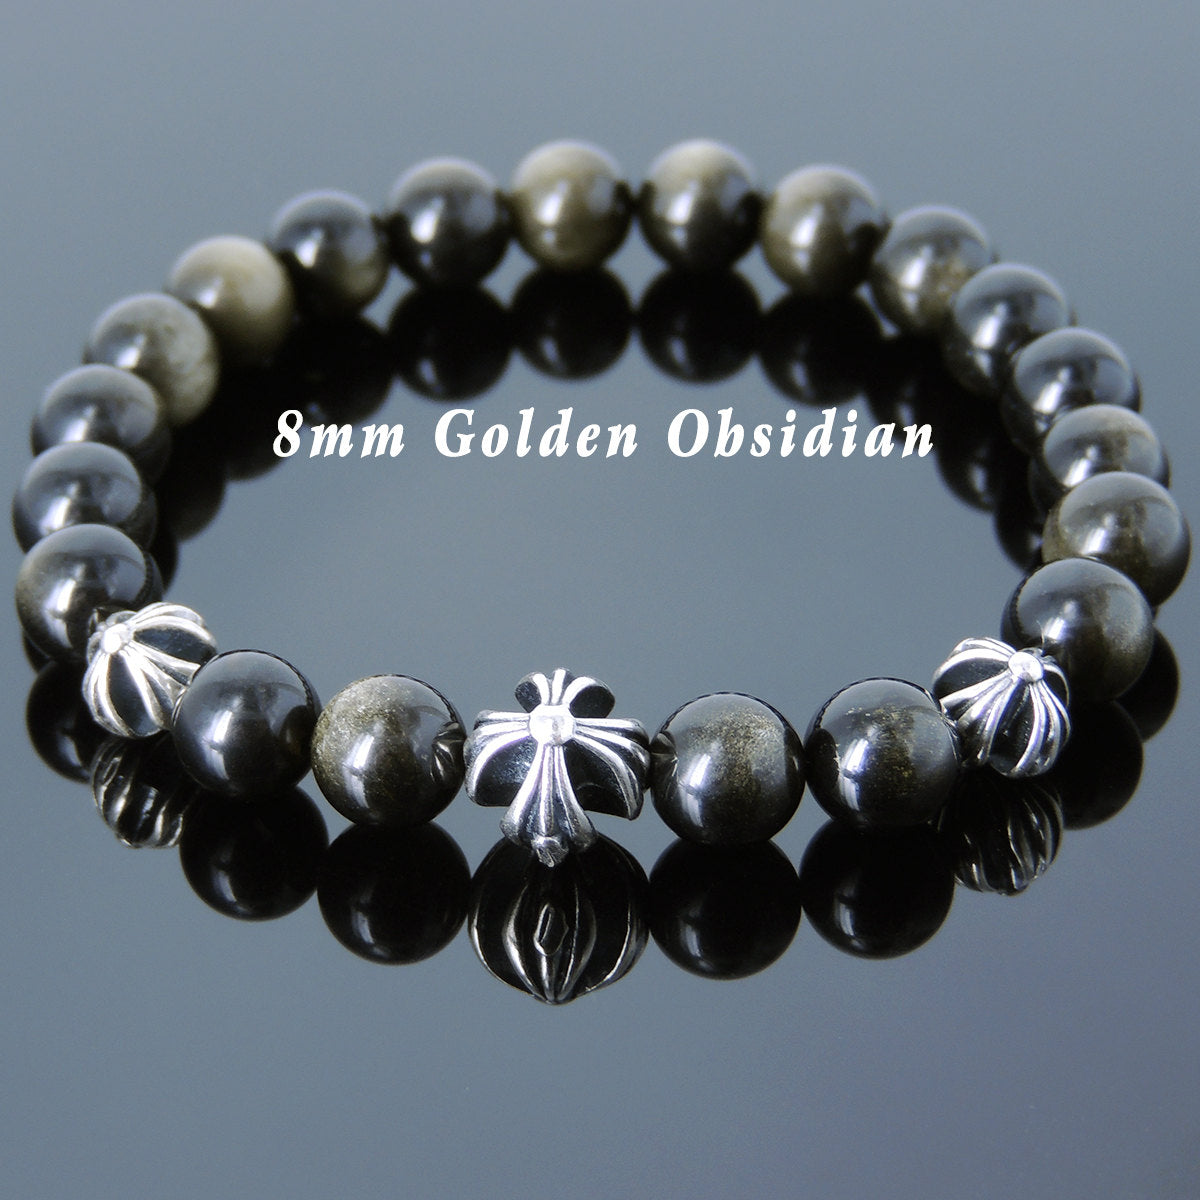 8mm Golden Obsidian Healing Gemstone Bracelet with S925 Sterling Silver Holy Trinity Cross Beads - Handmade by Gem & Silver BR746